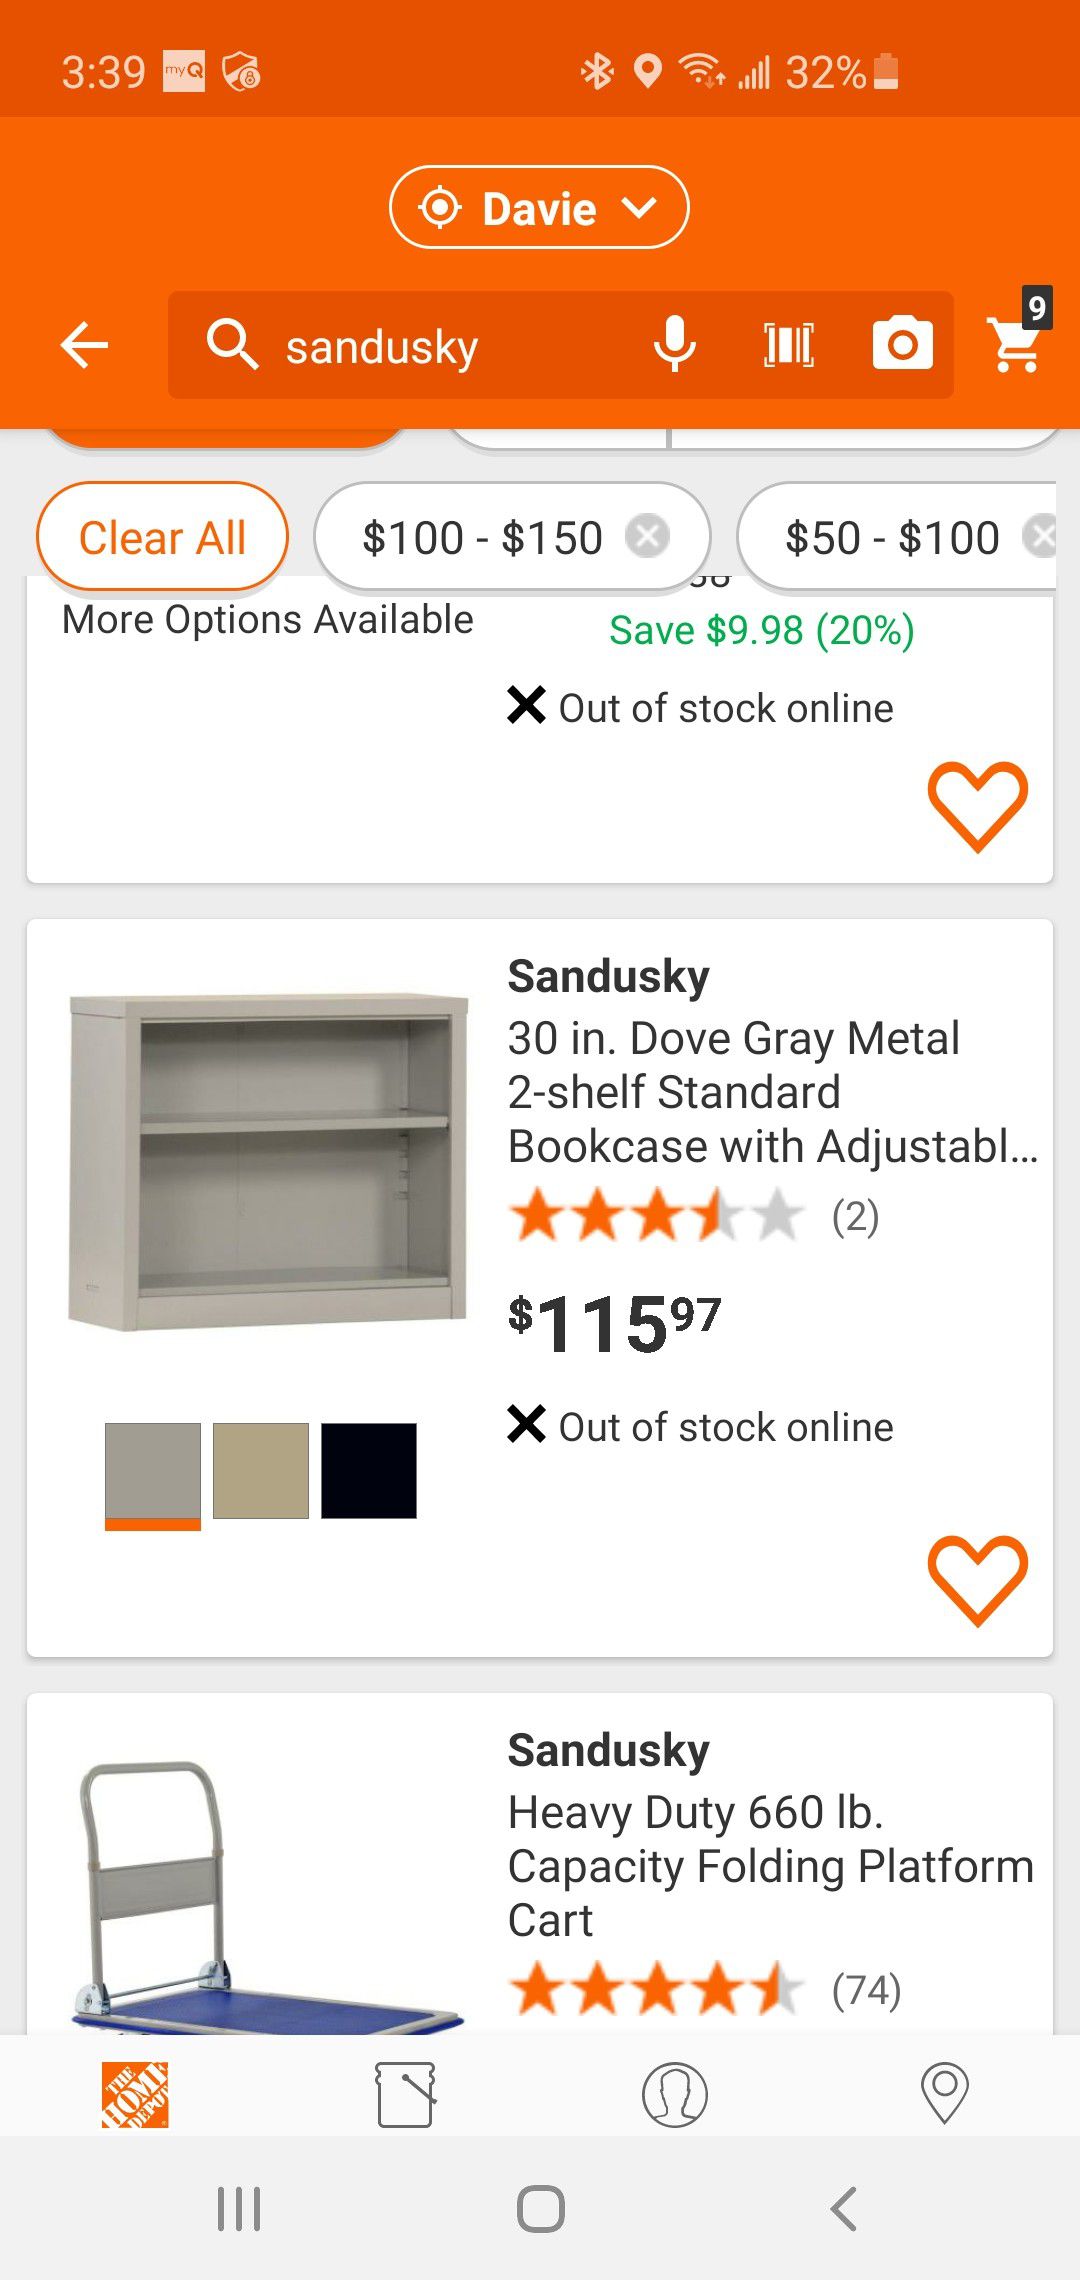 (3) Metal storage shelves